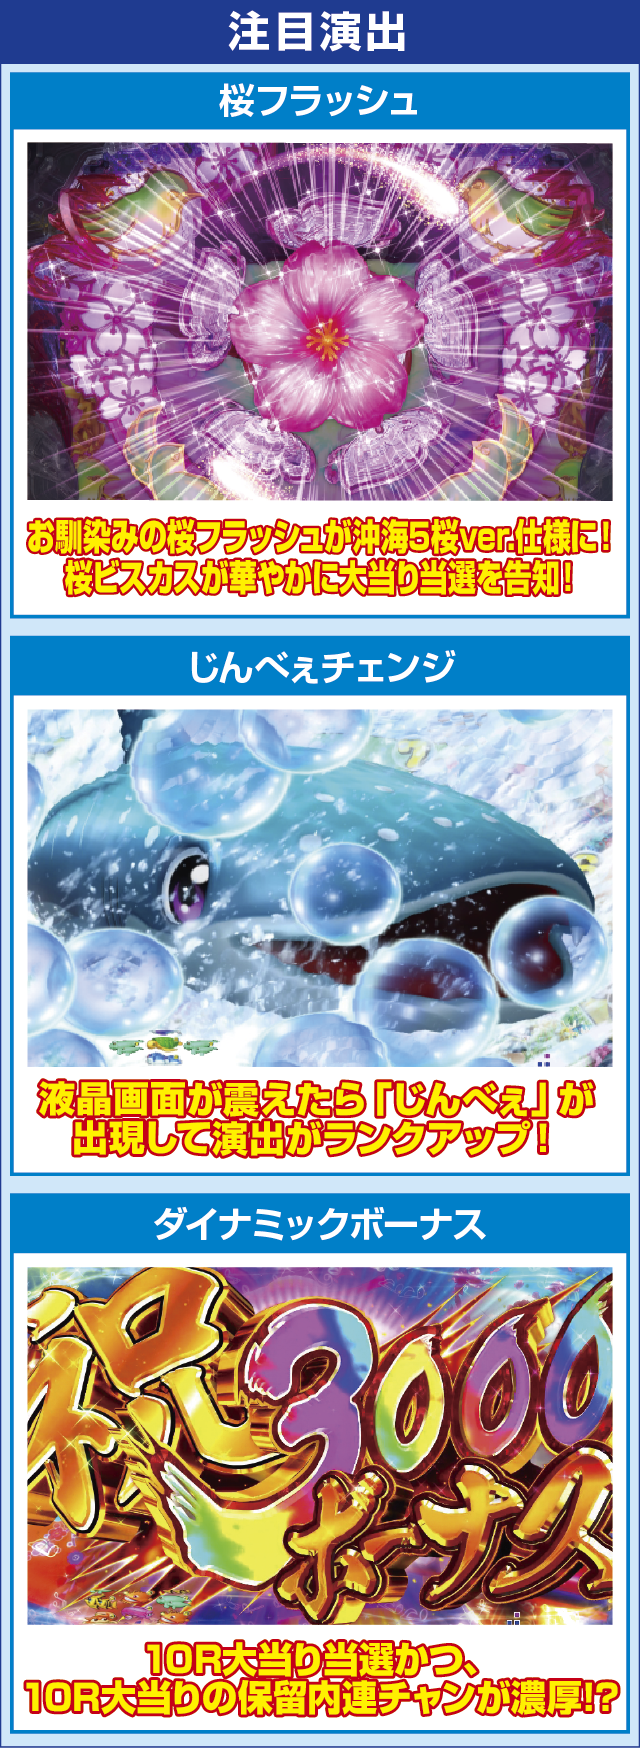 Pスーパー海物語 IN 沖縄5 桜ver.199のピックアップポイント